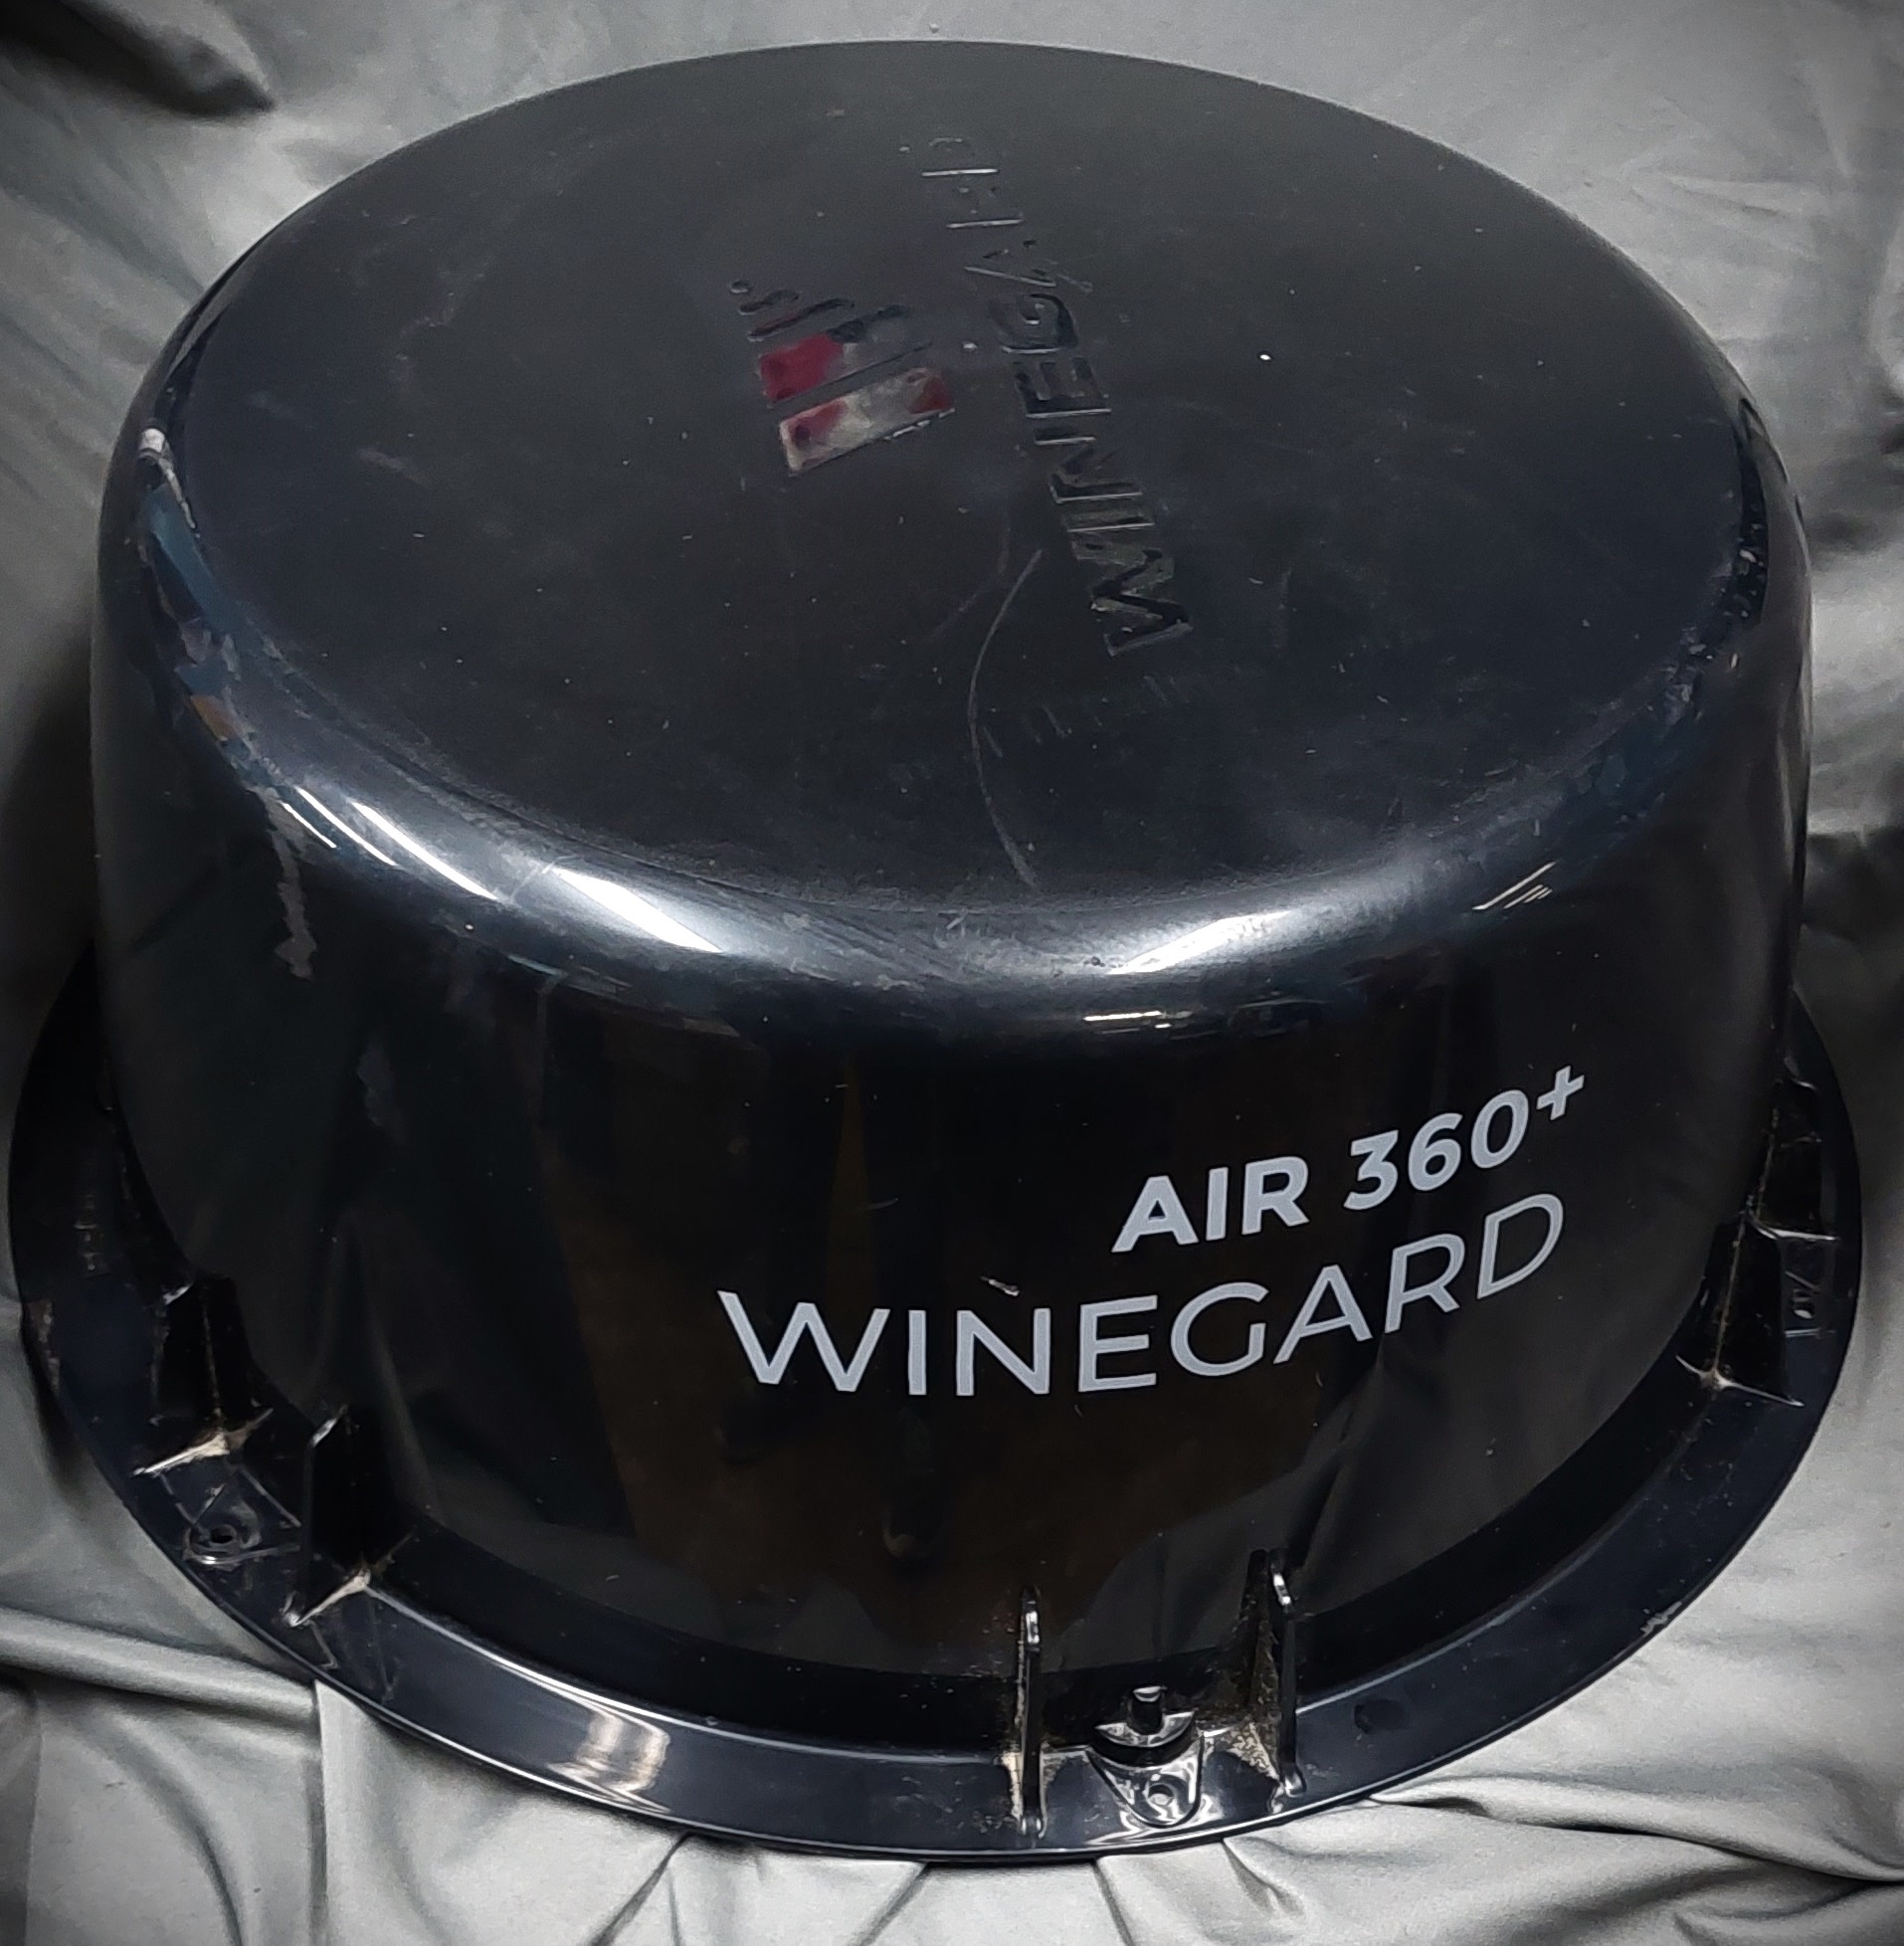 winegard air